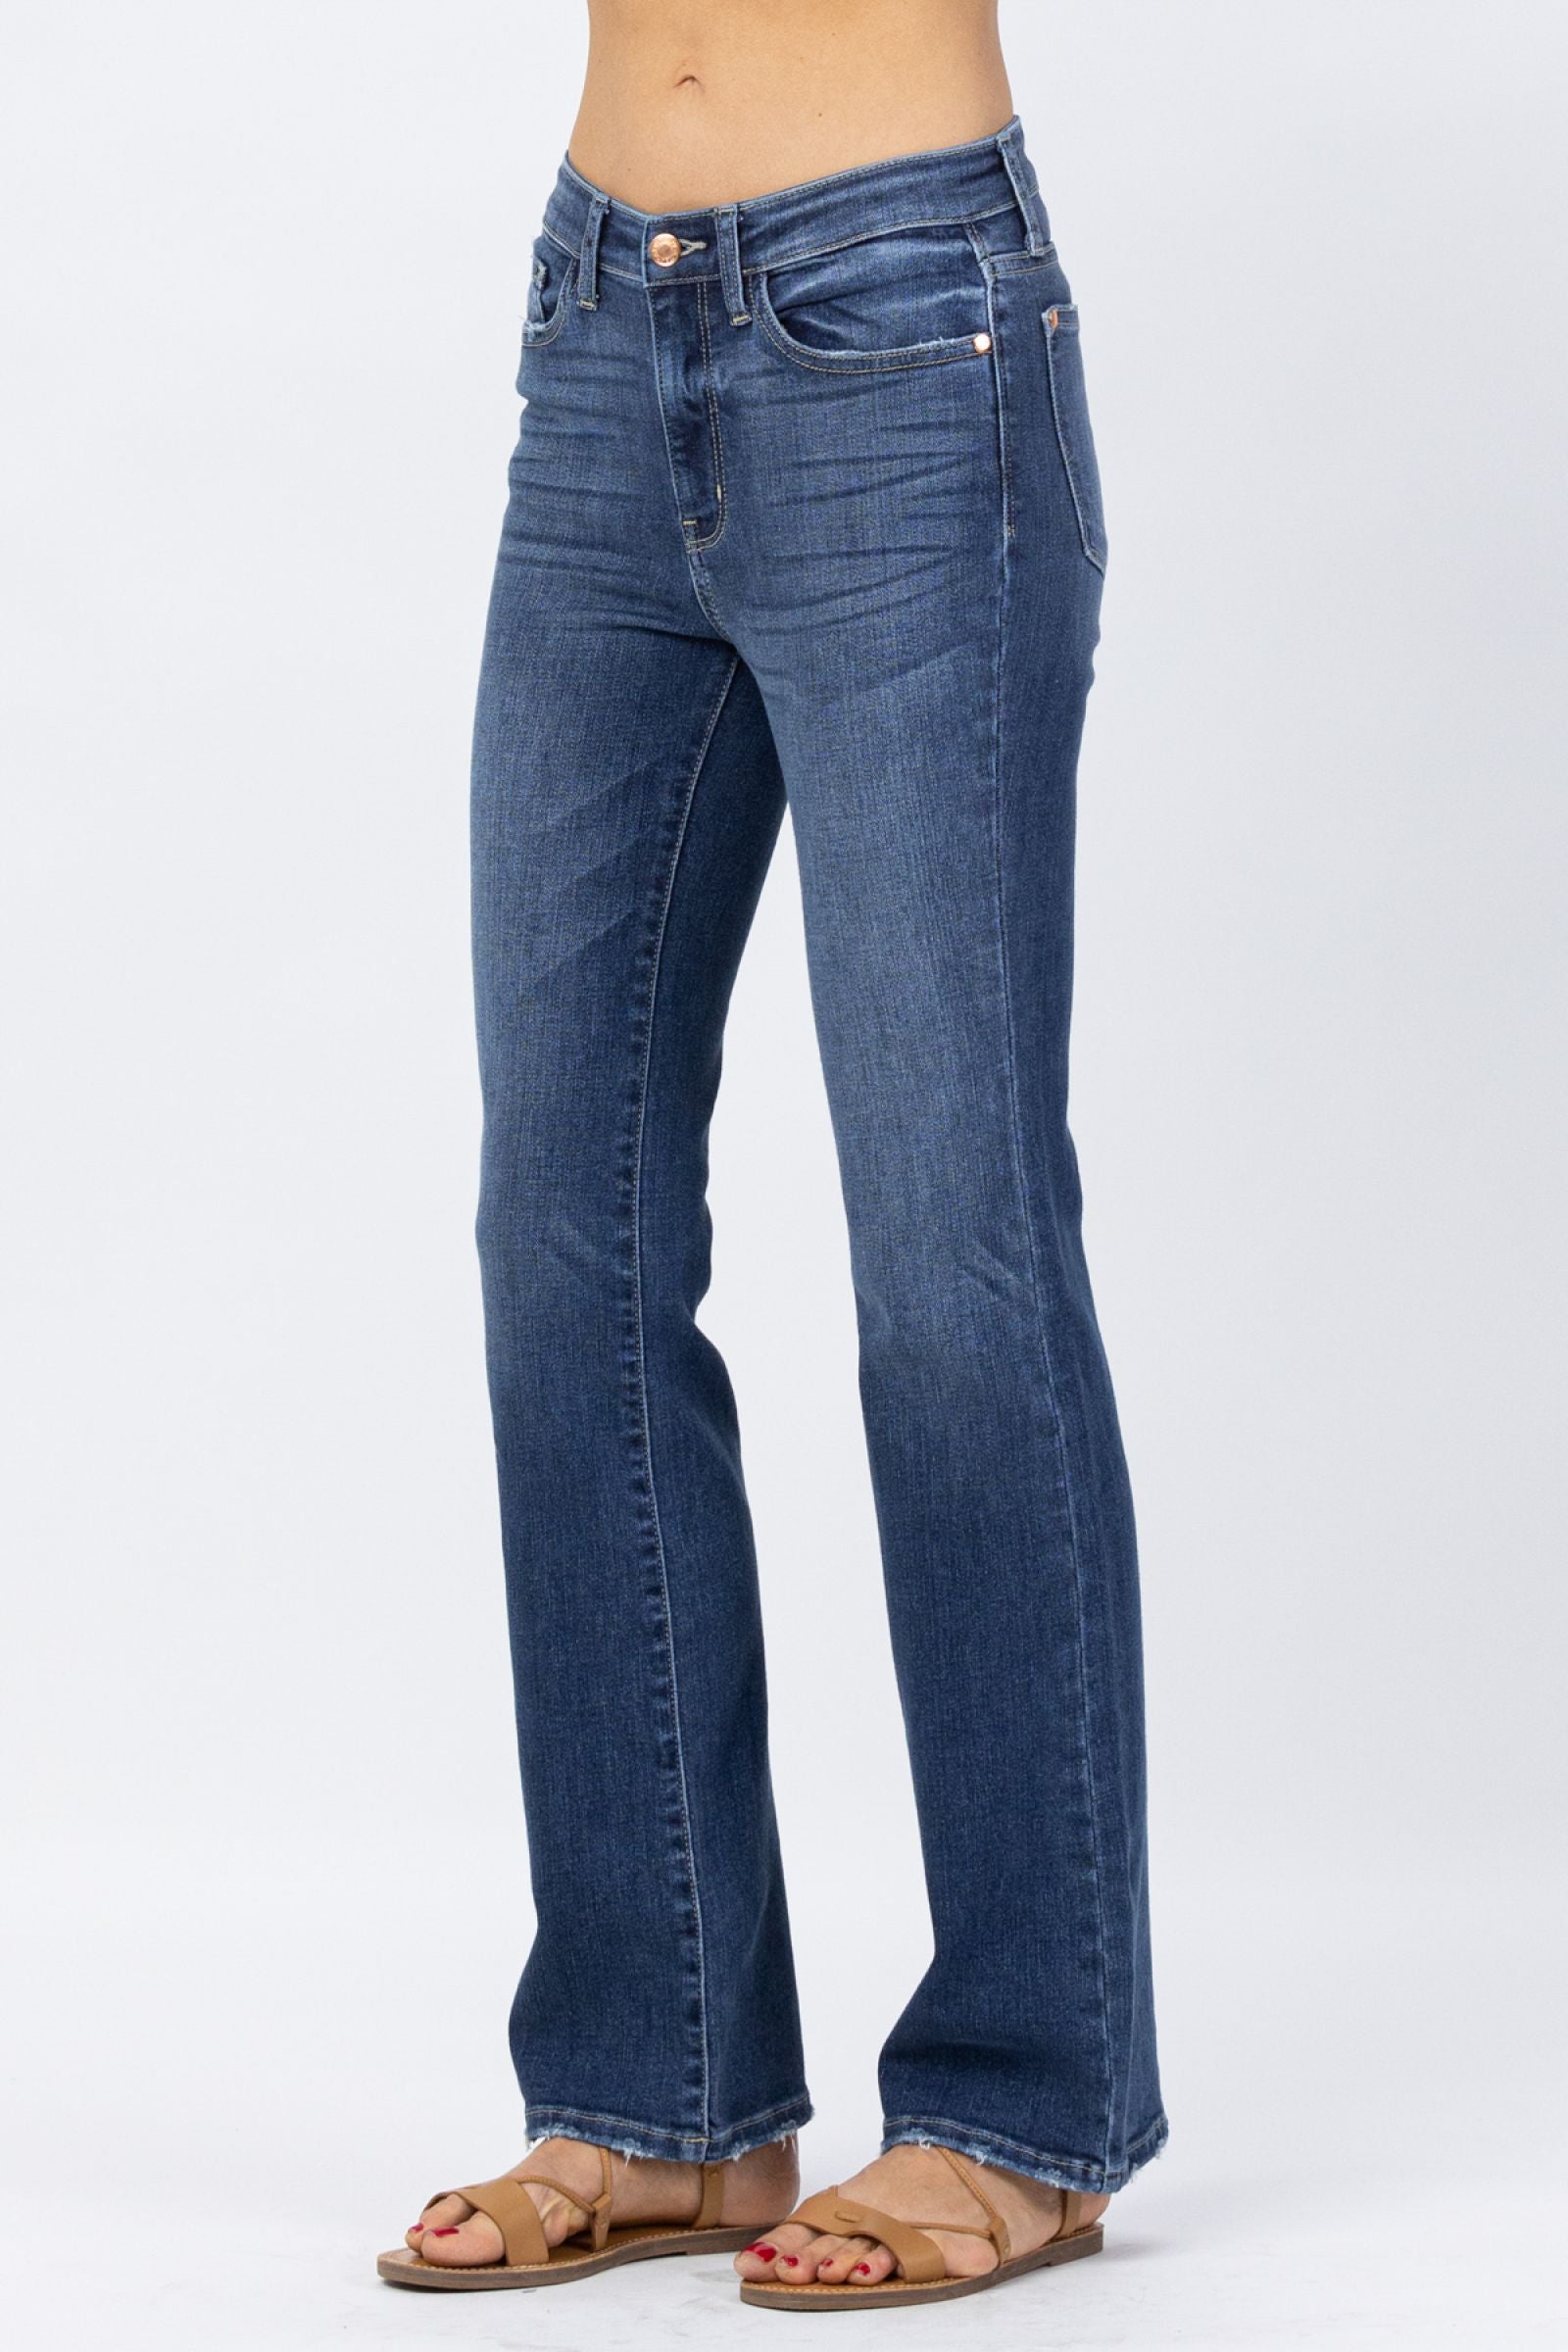 Judy Blue Non Distressed Bootcut Denim Jeans